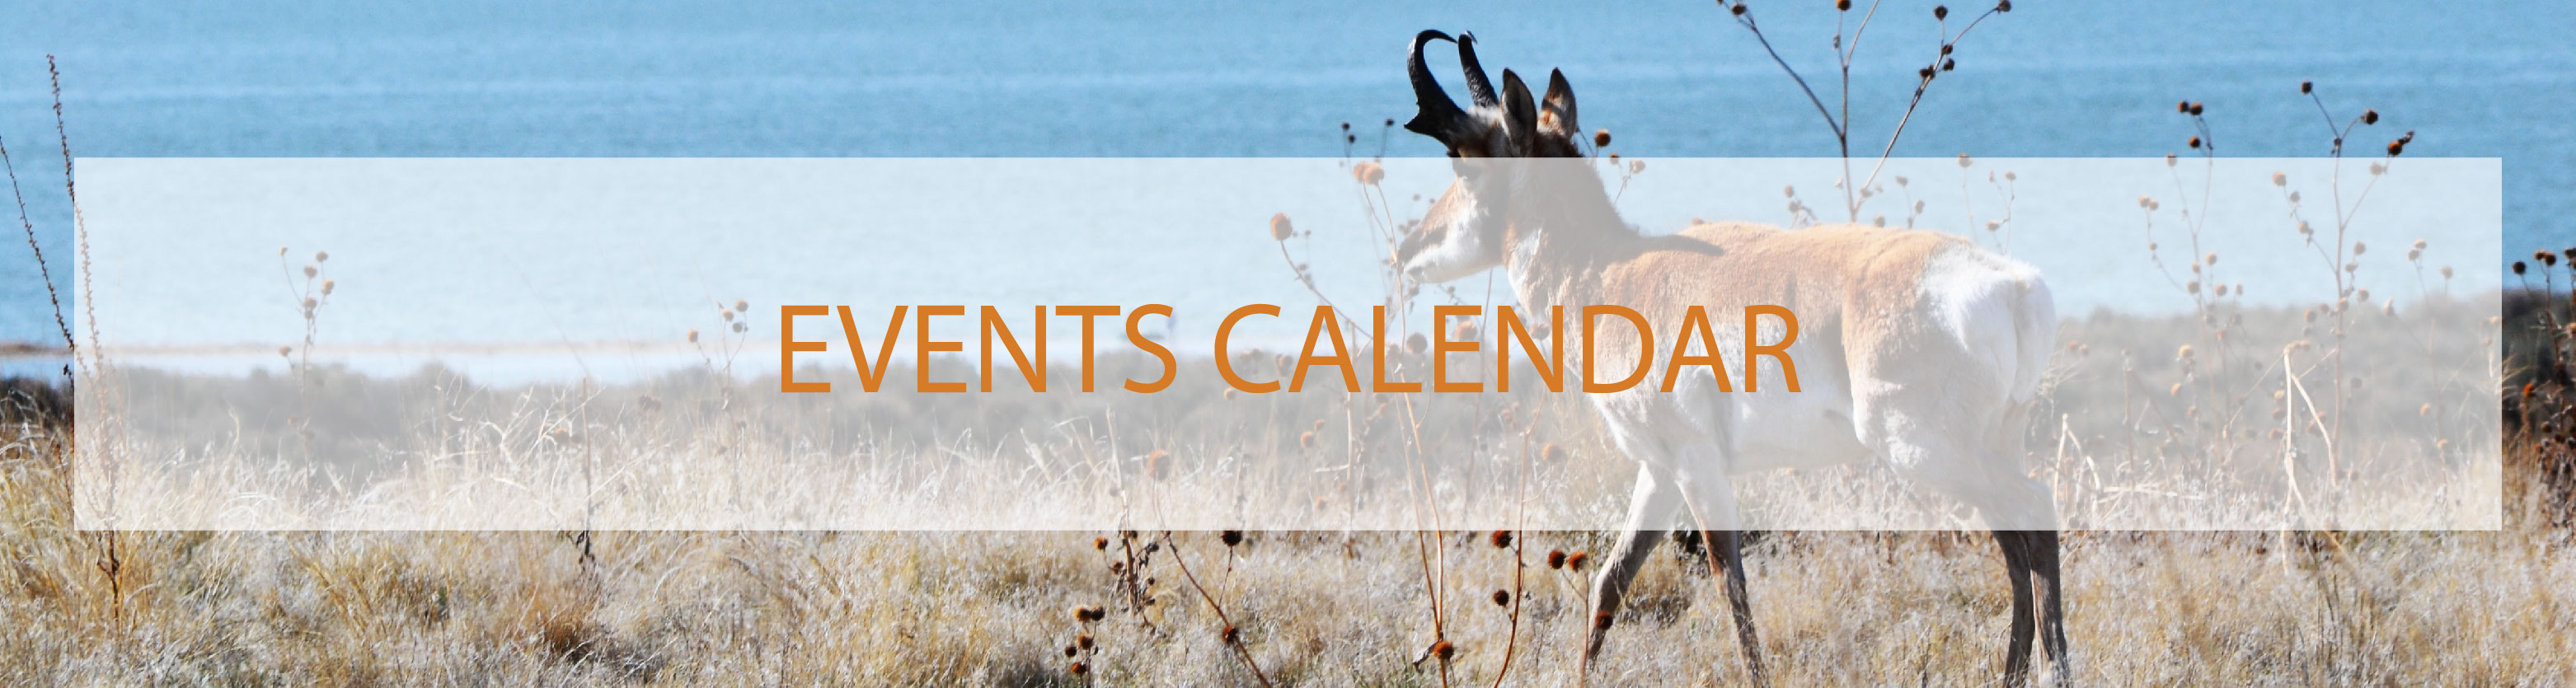 events-calendar-american-west-center-the-university-of-utah